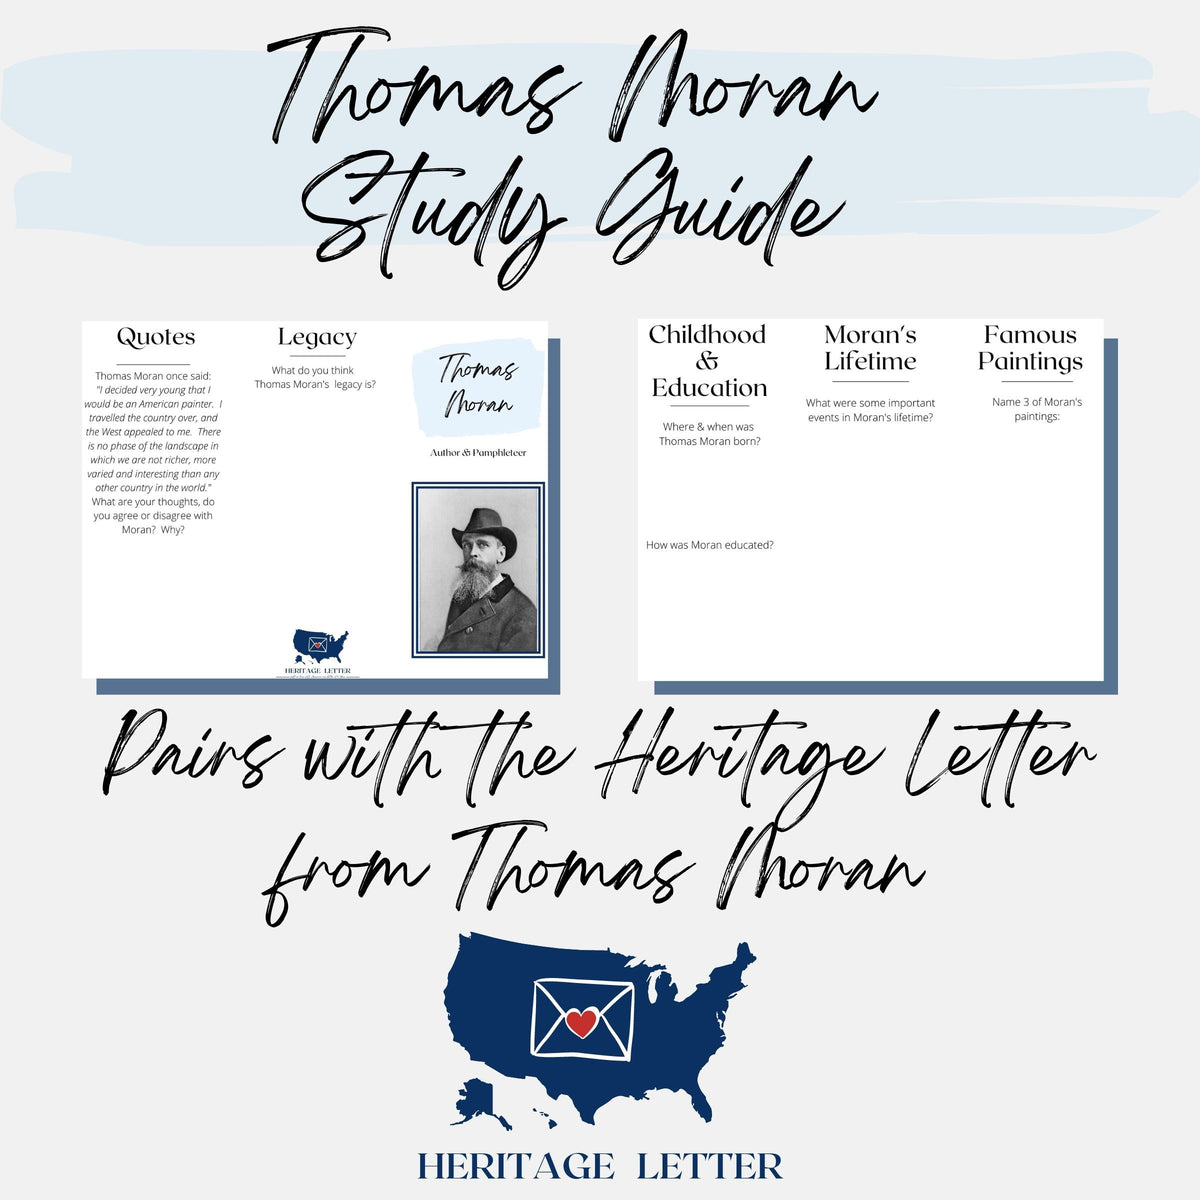 Thomas Moran Study Guide Heritage Letter